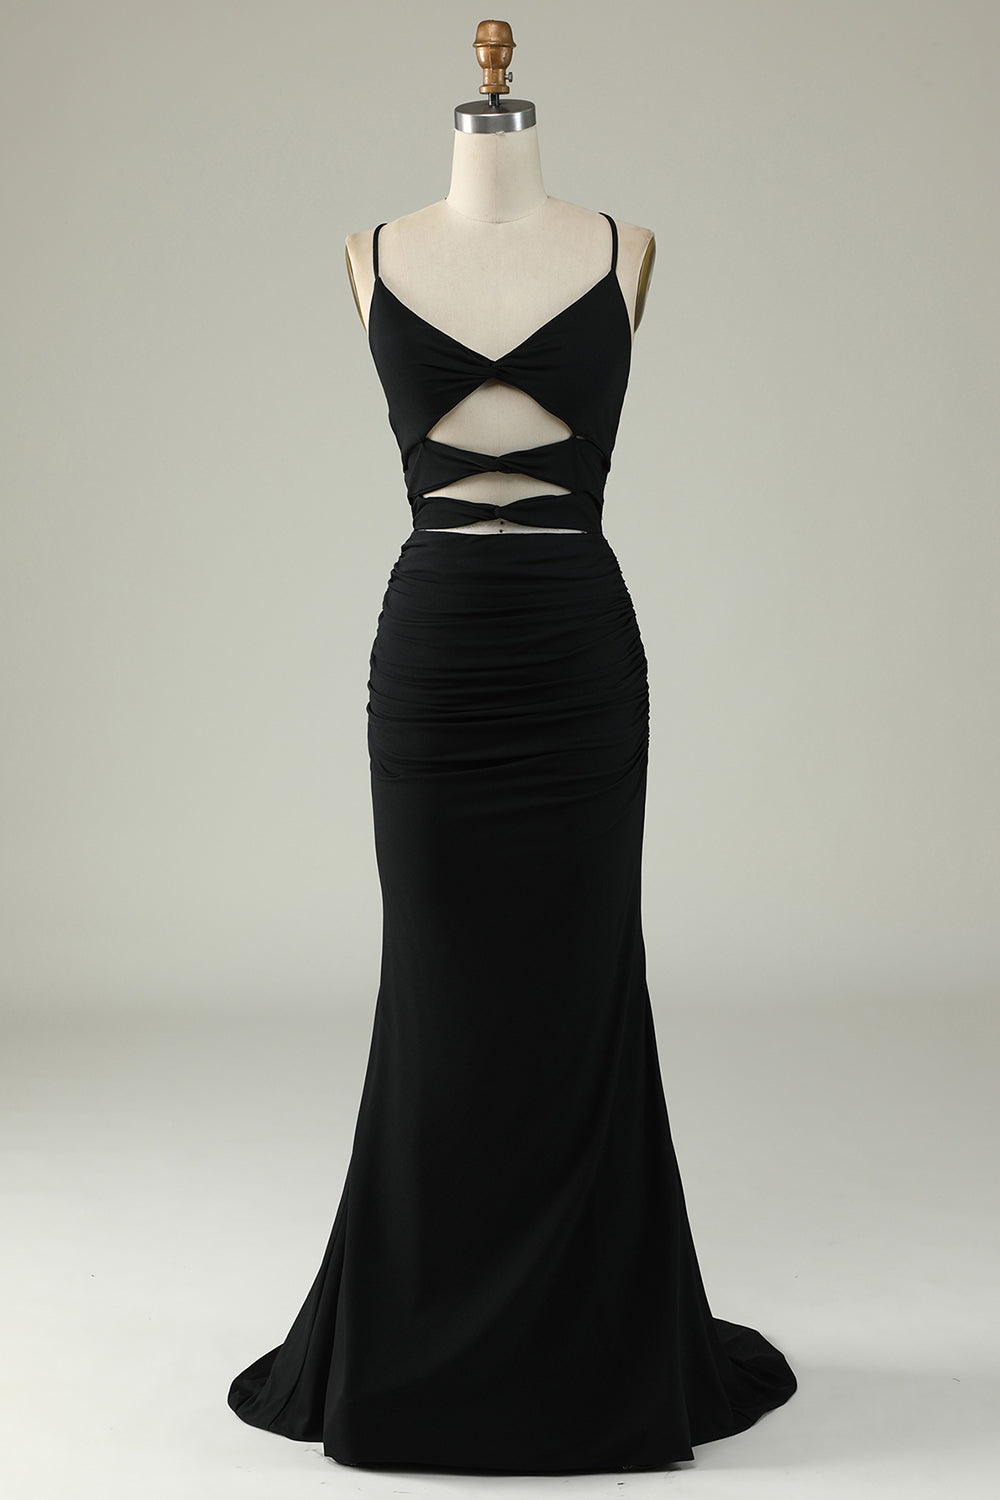 Mermaid Lace-Up Back Black Long Prom Dress